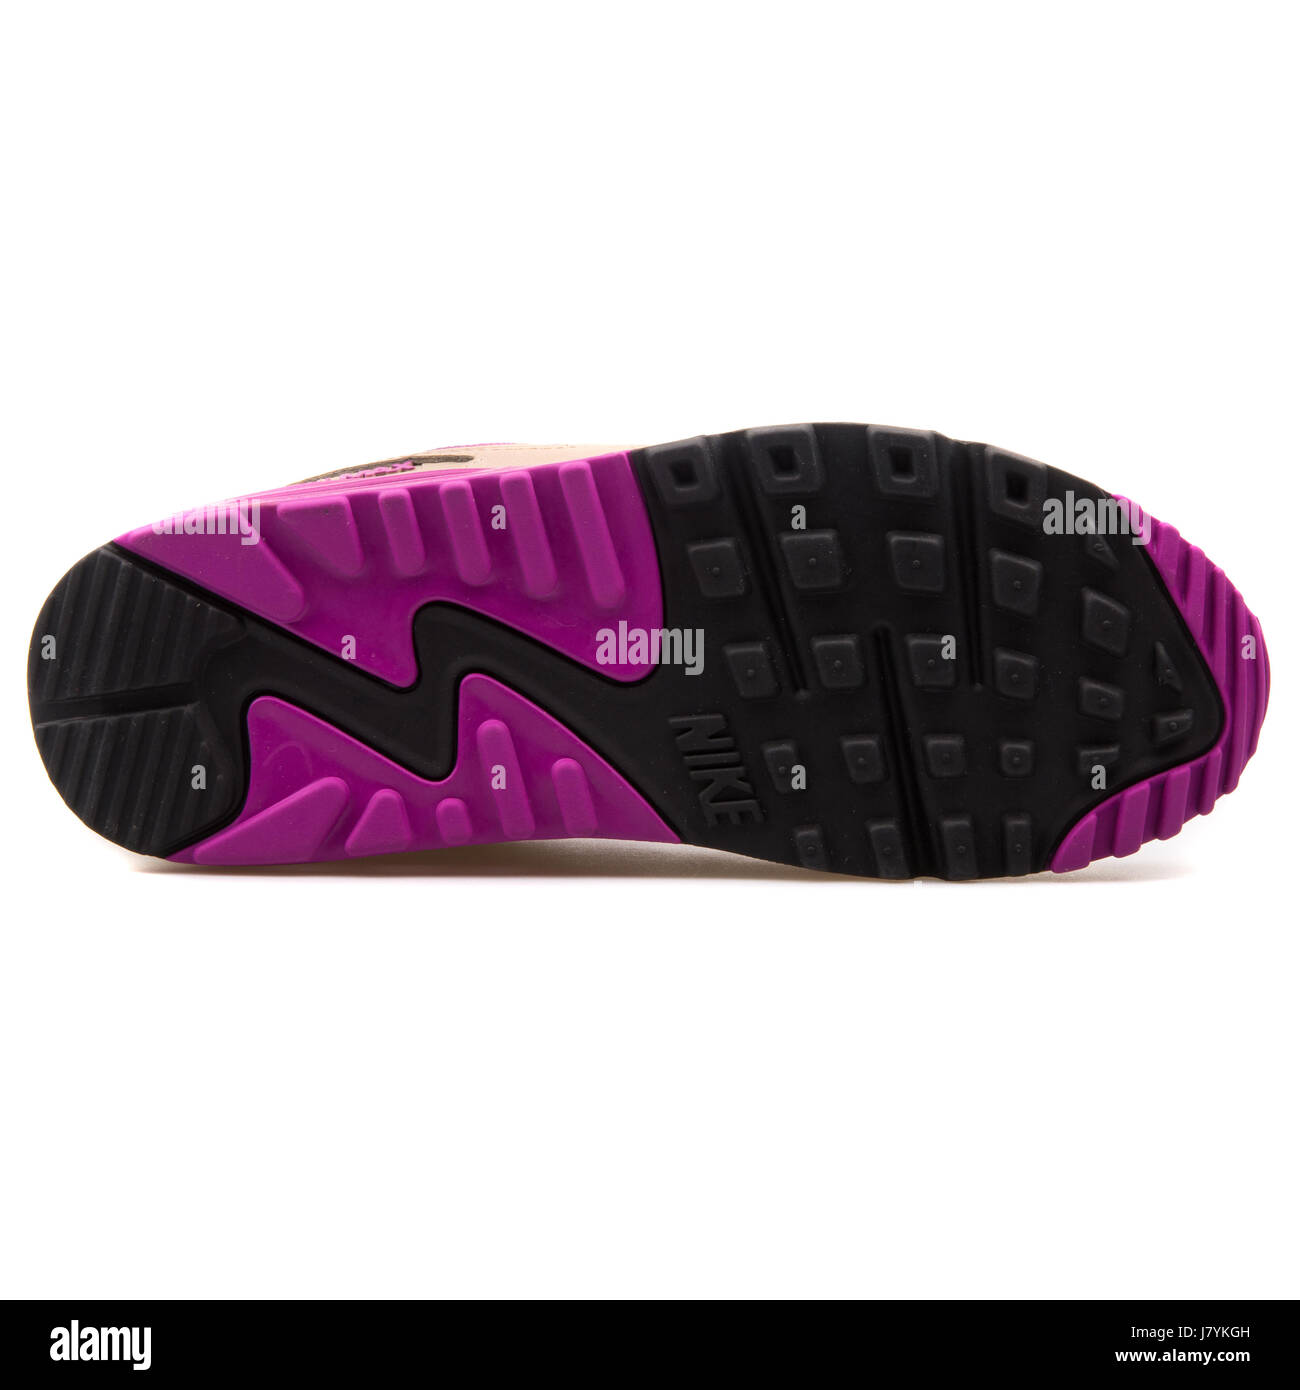 Nike WMNS Air Max 90 LTHR Women's Leather Running Desert/Purple-Khaki  Sneakers - 768887-200 Stock Photo - Alamy